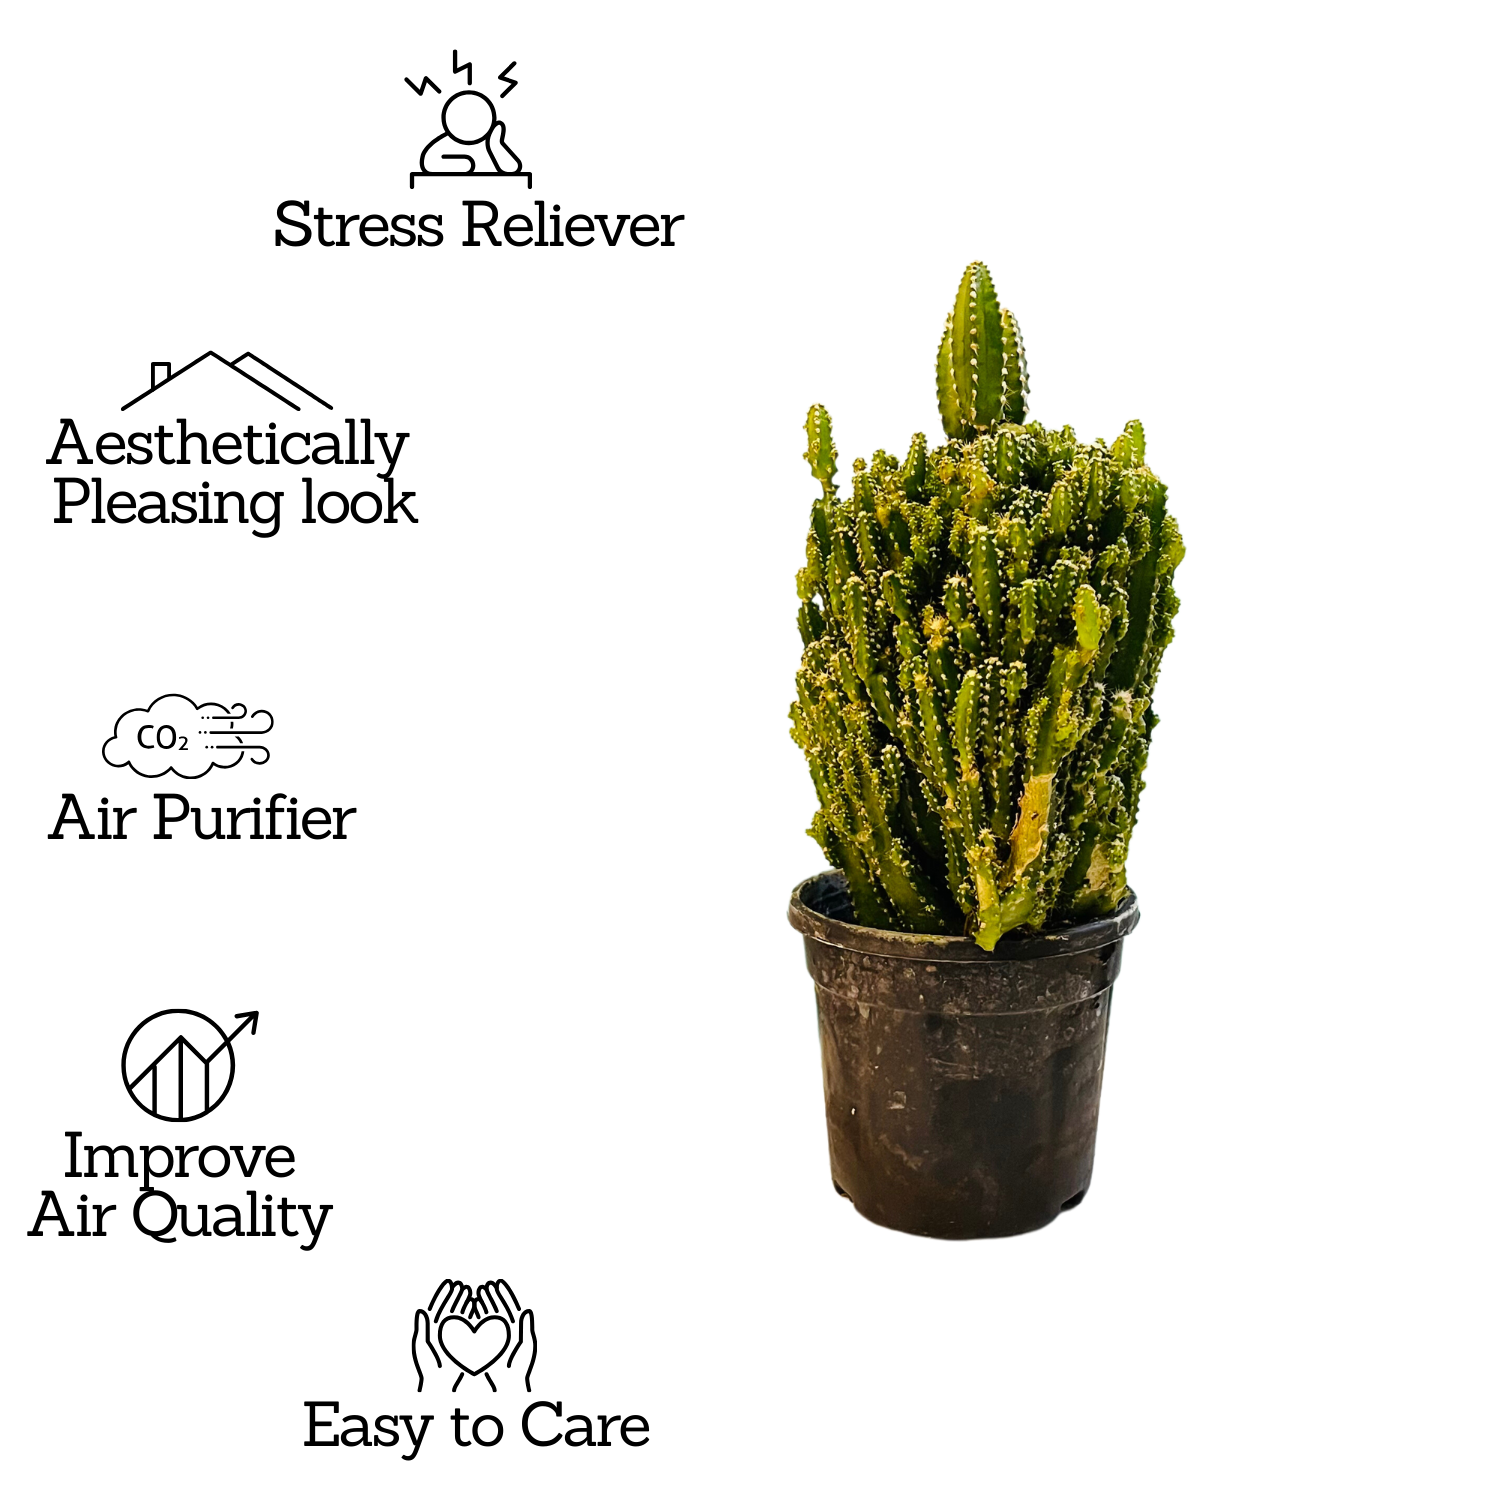 Cereus Fairy Castle Cactus Live Plant in 4 Inch Pot